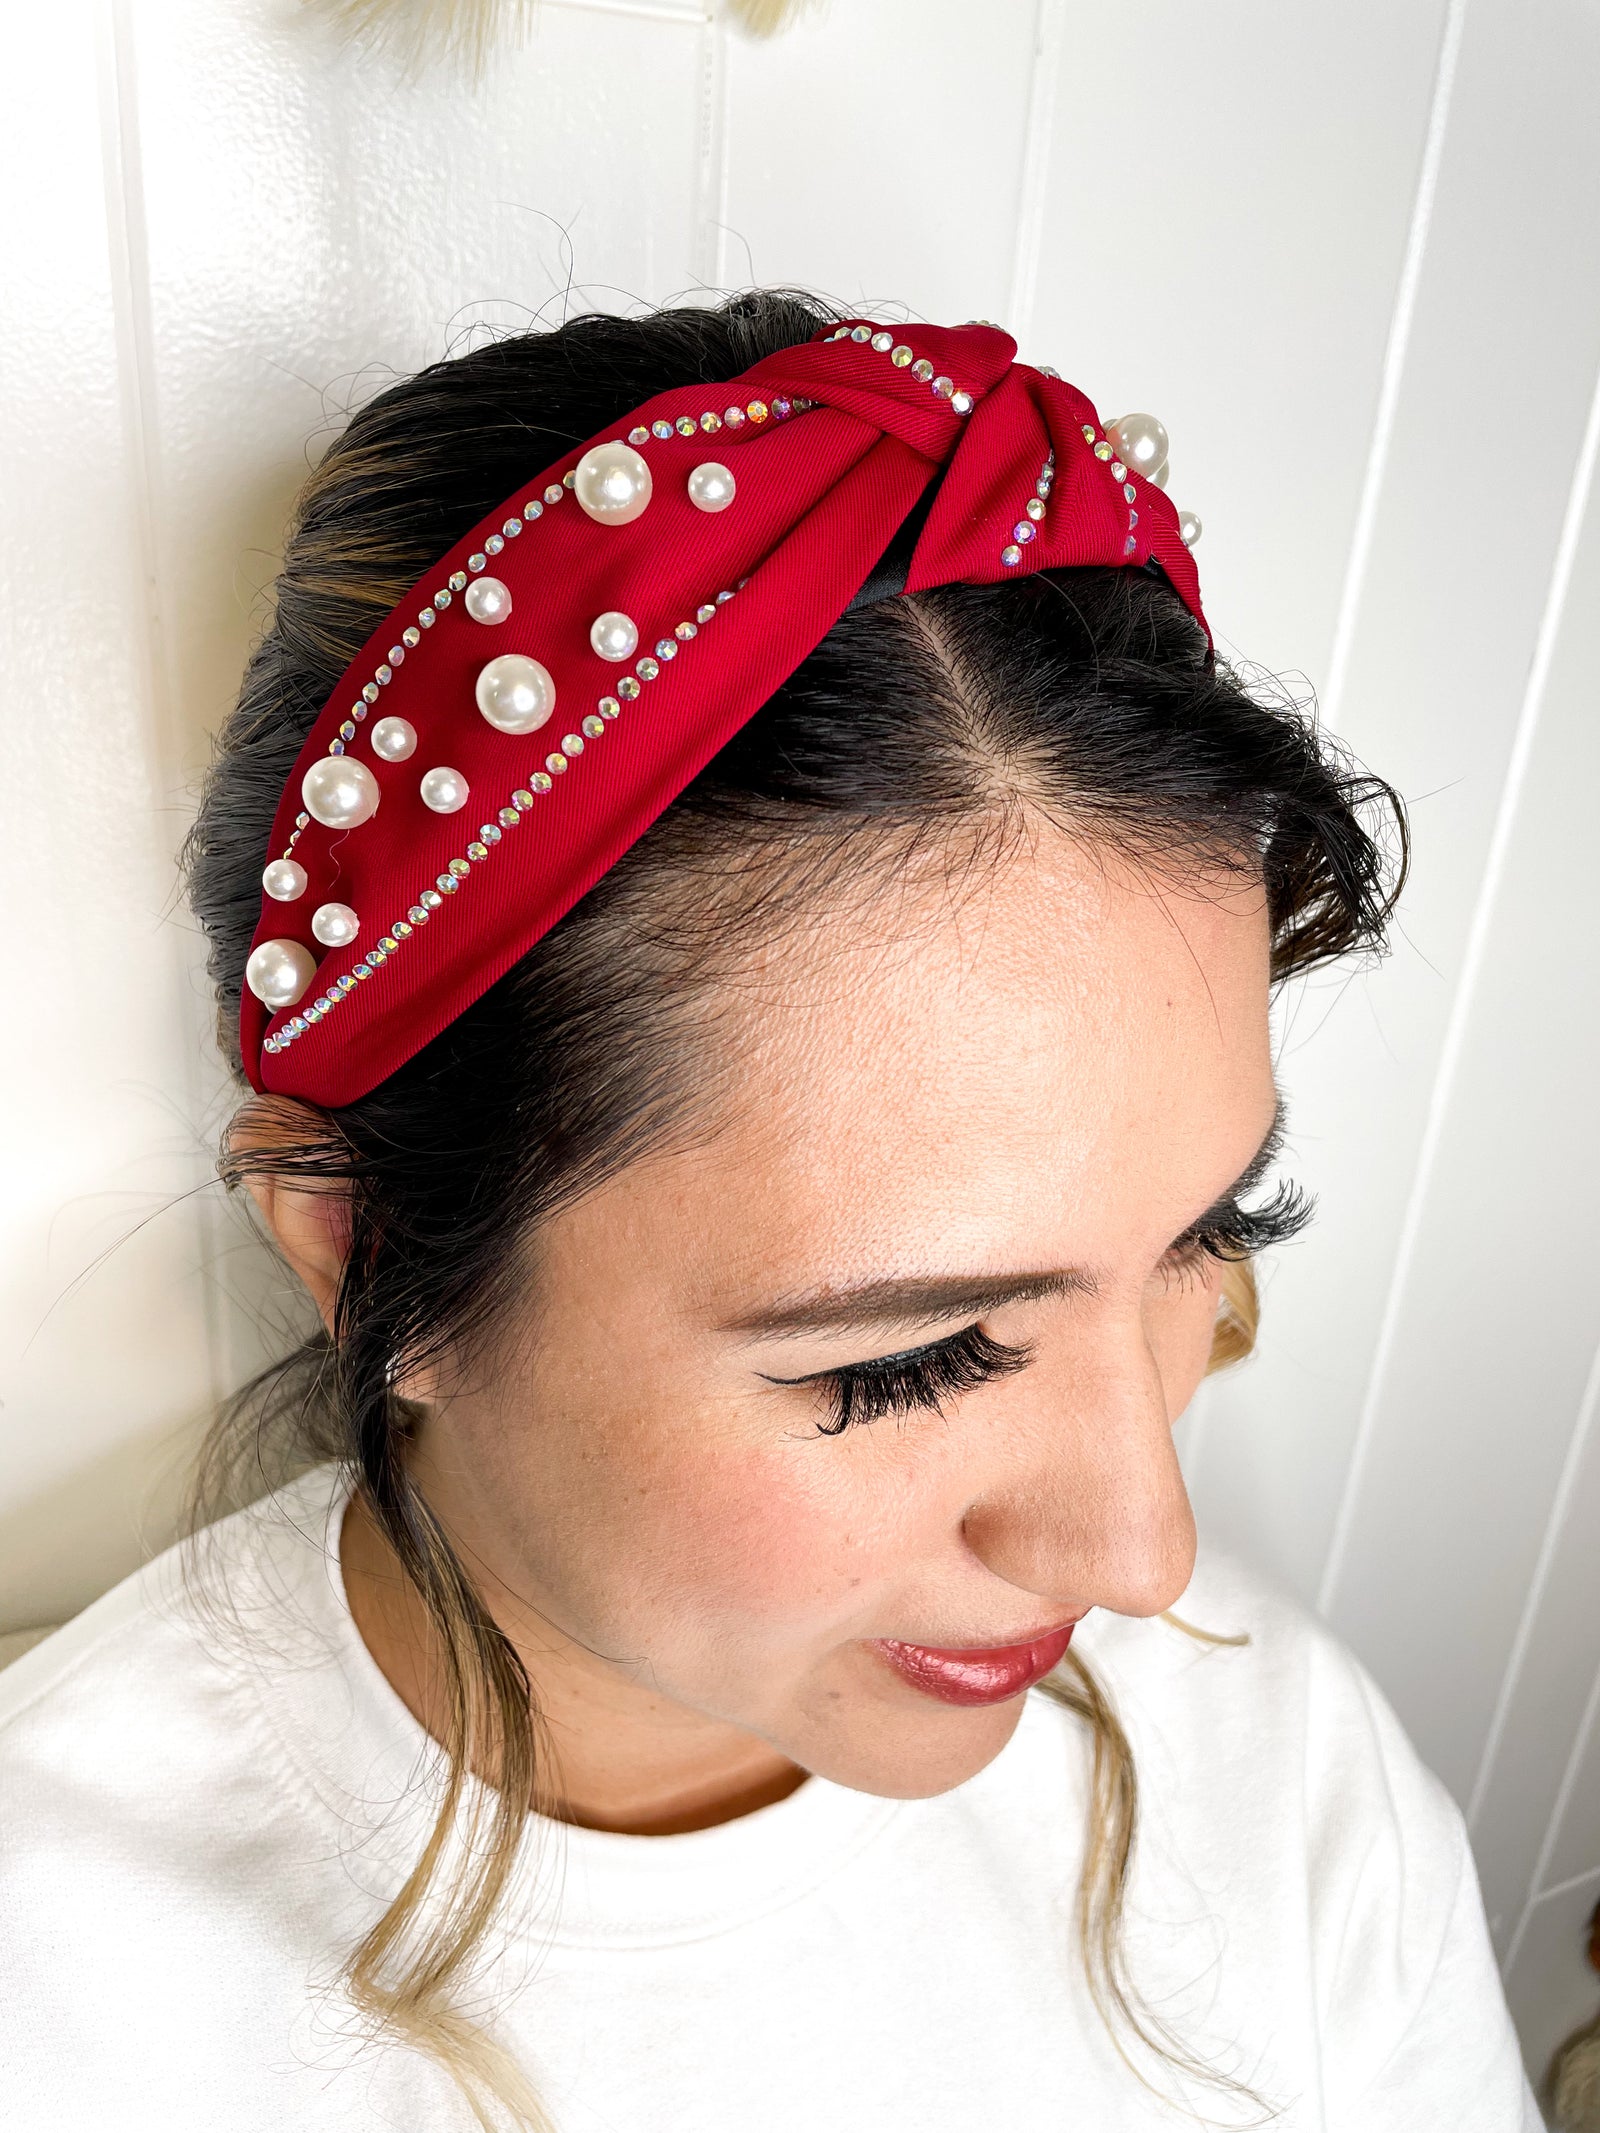 Elizabeth Embellished Center Knott Headband - Red Color and Pearls